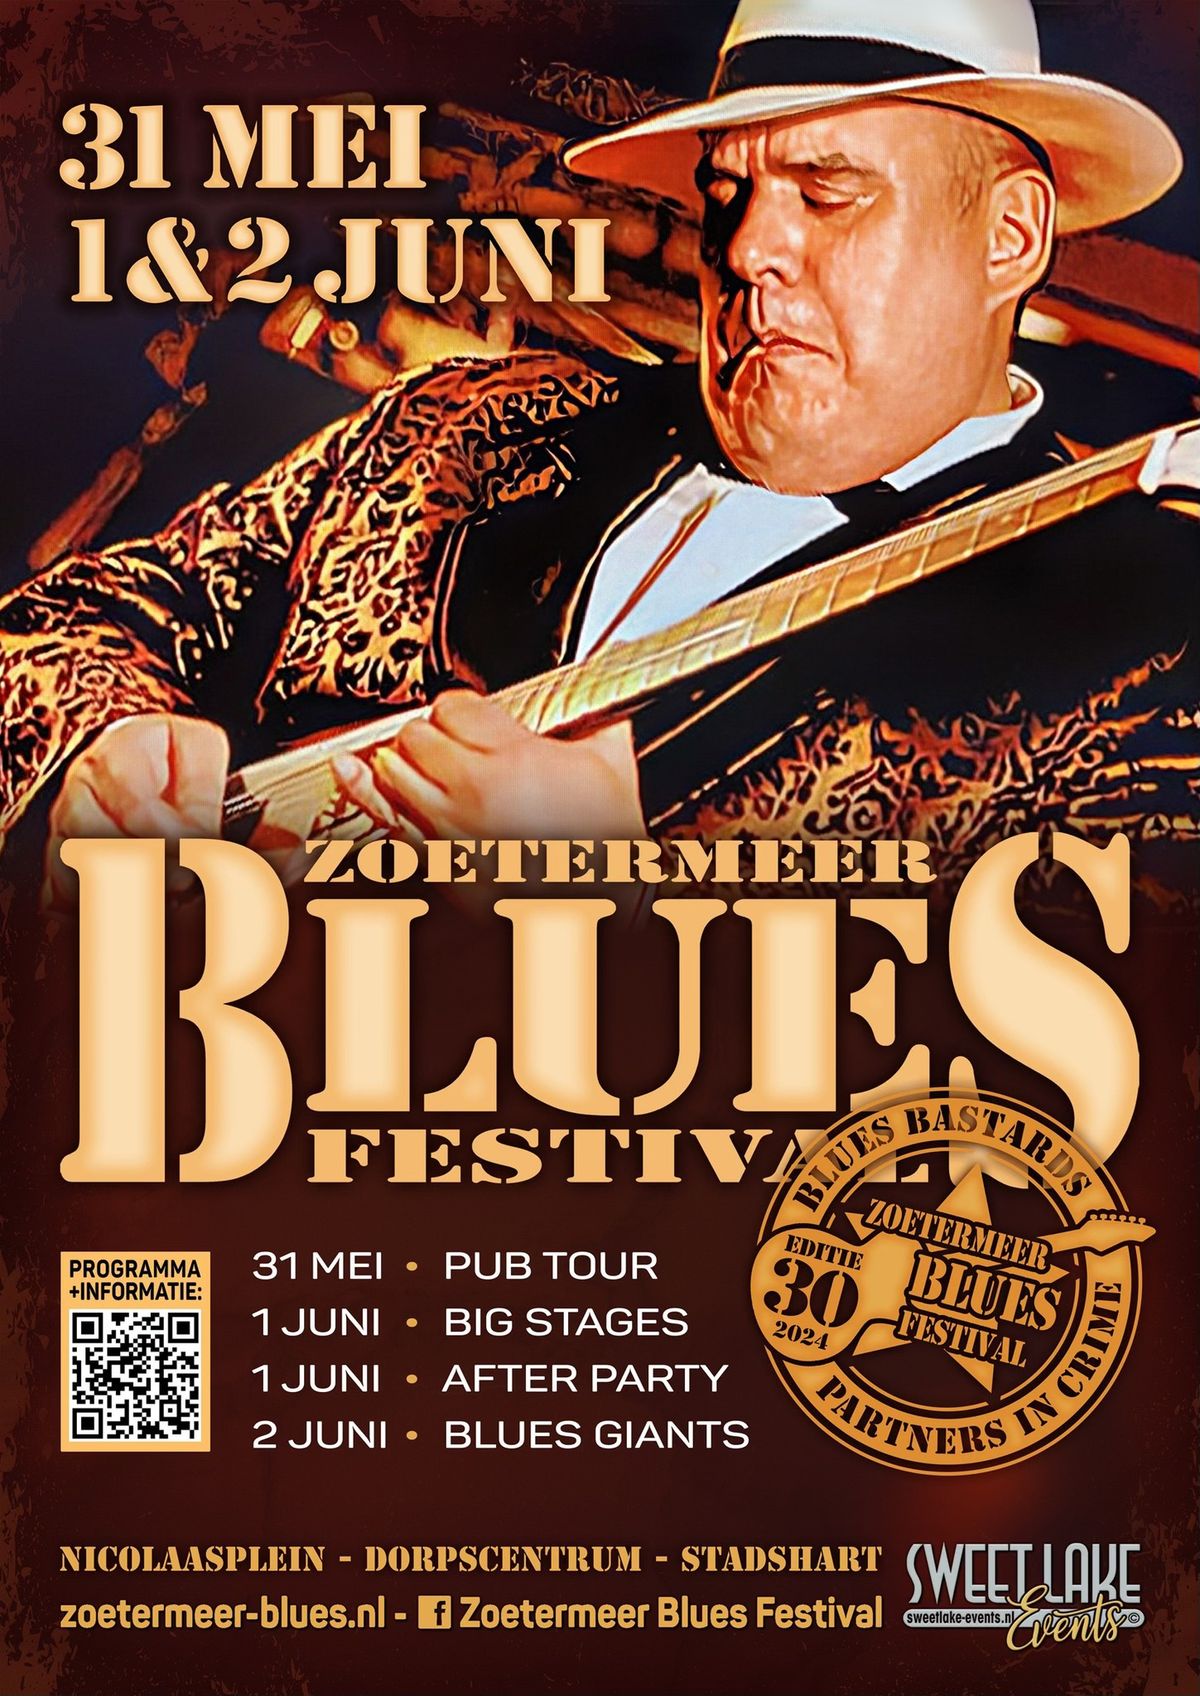 Bluesfestival 2 juni @nicolaasplein